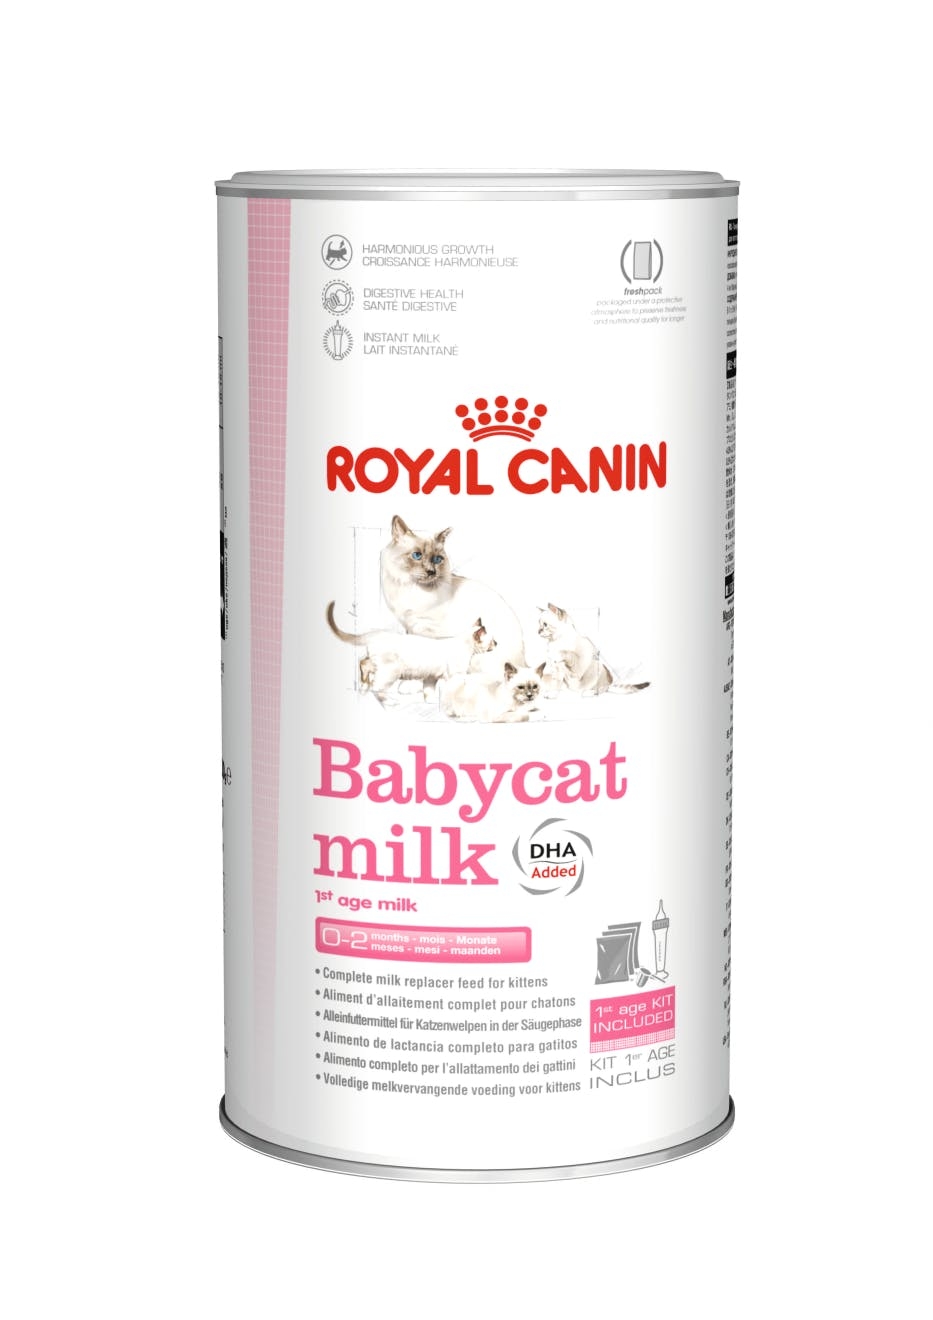 Royal Canin Babycat milk. Modermælkserstatning til killinger fra fødsel. 300g.